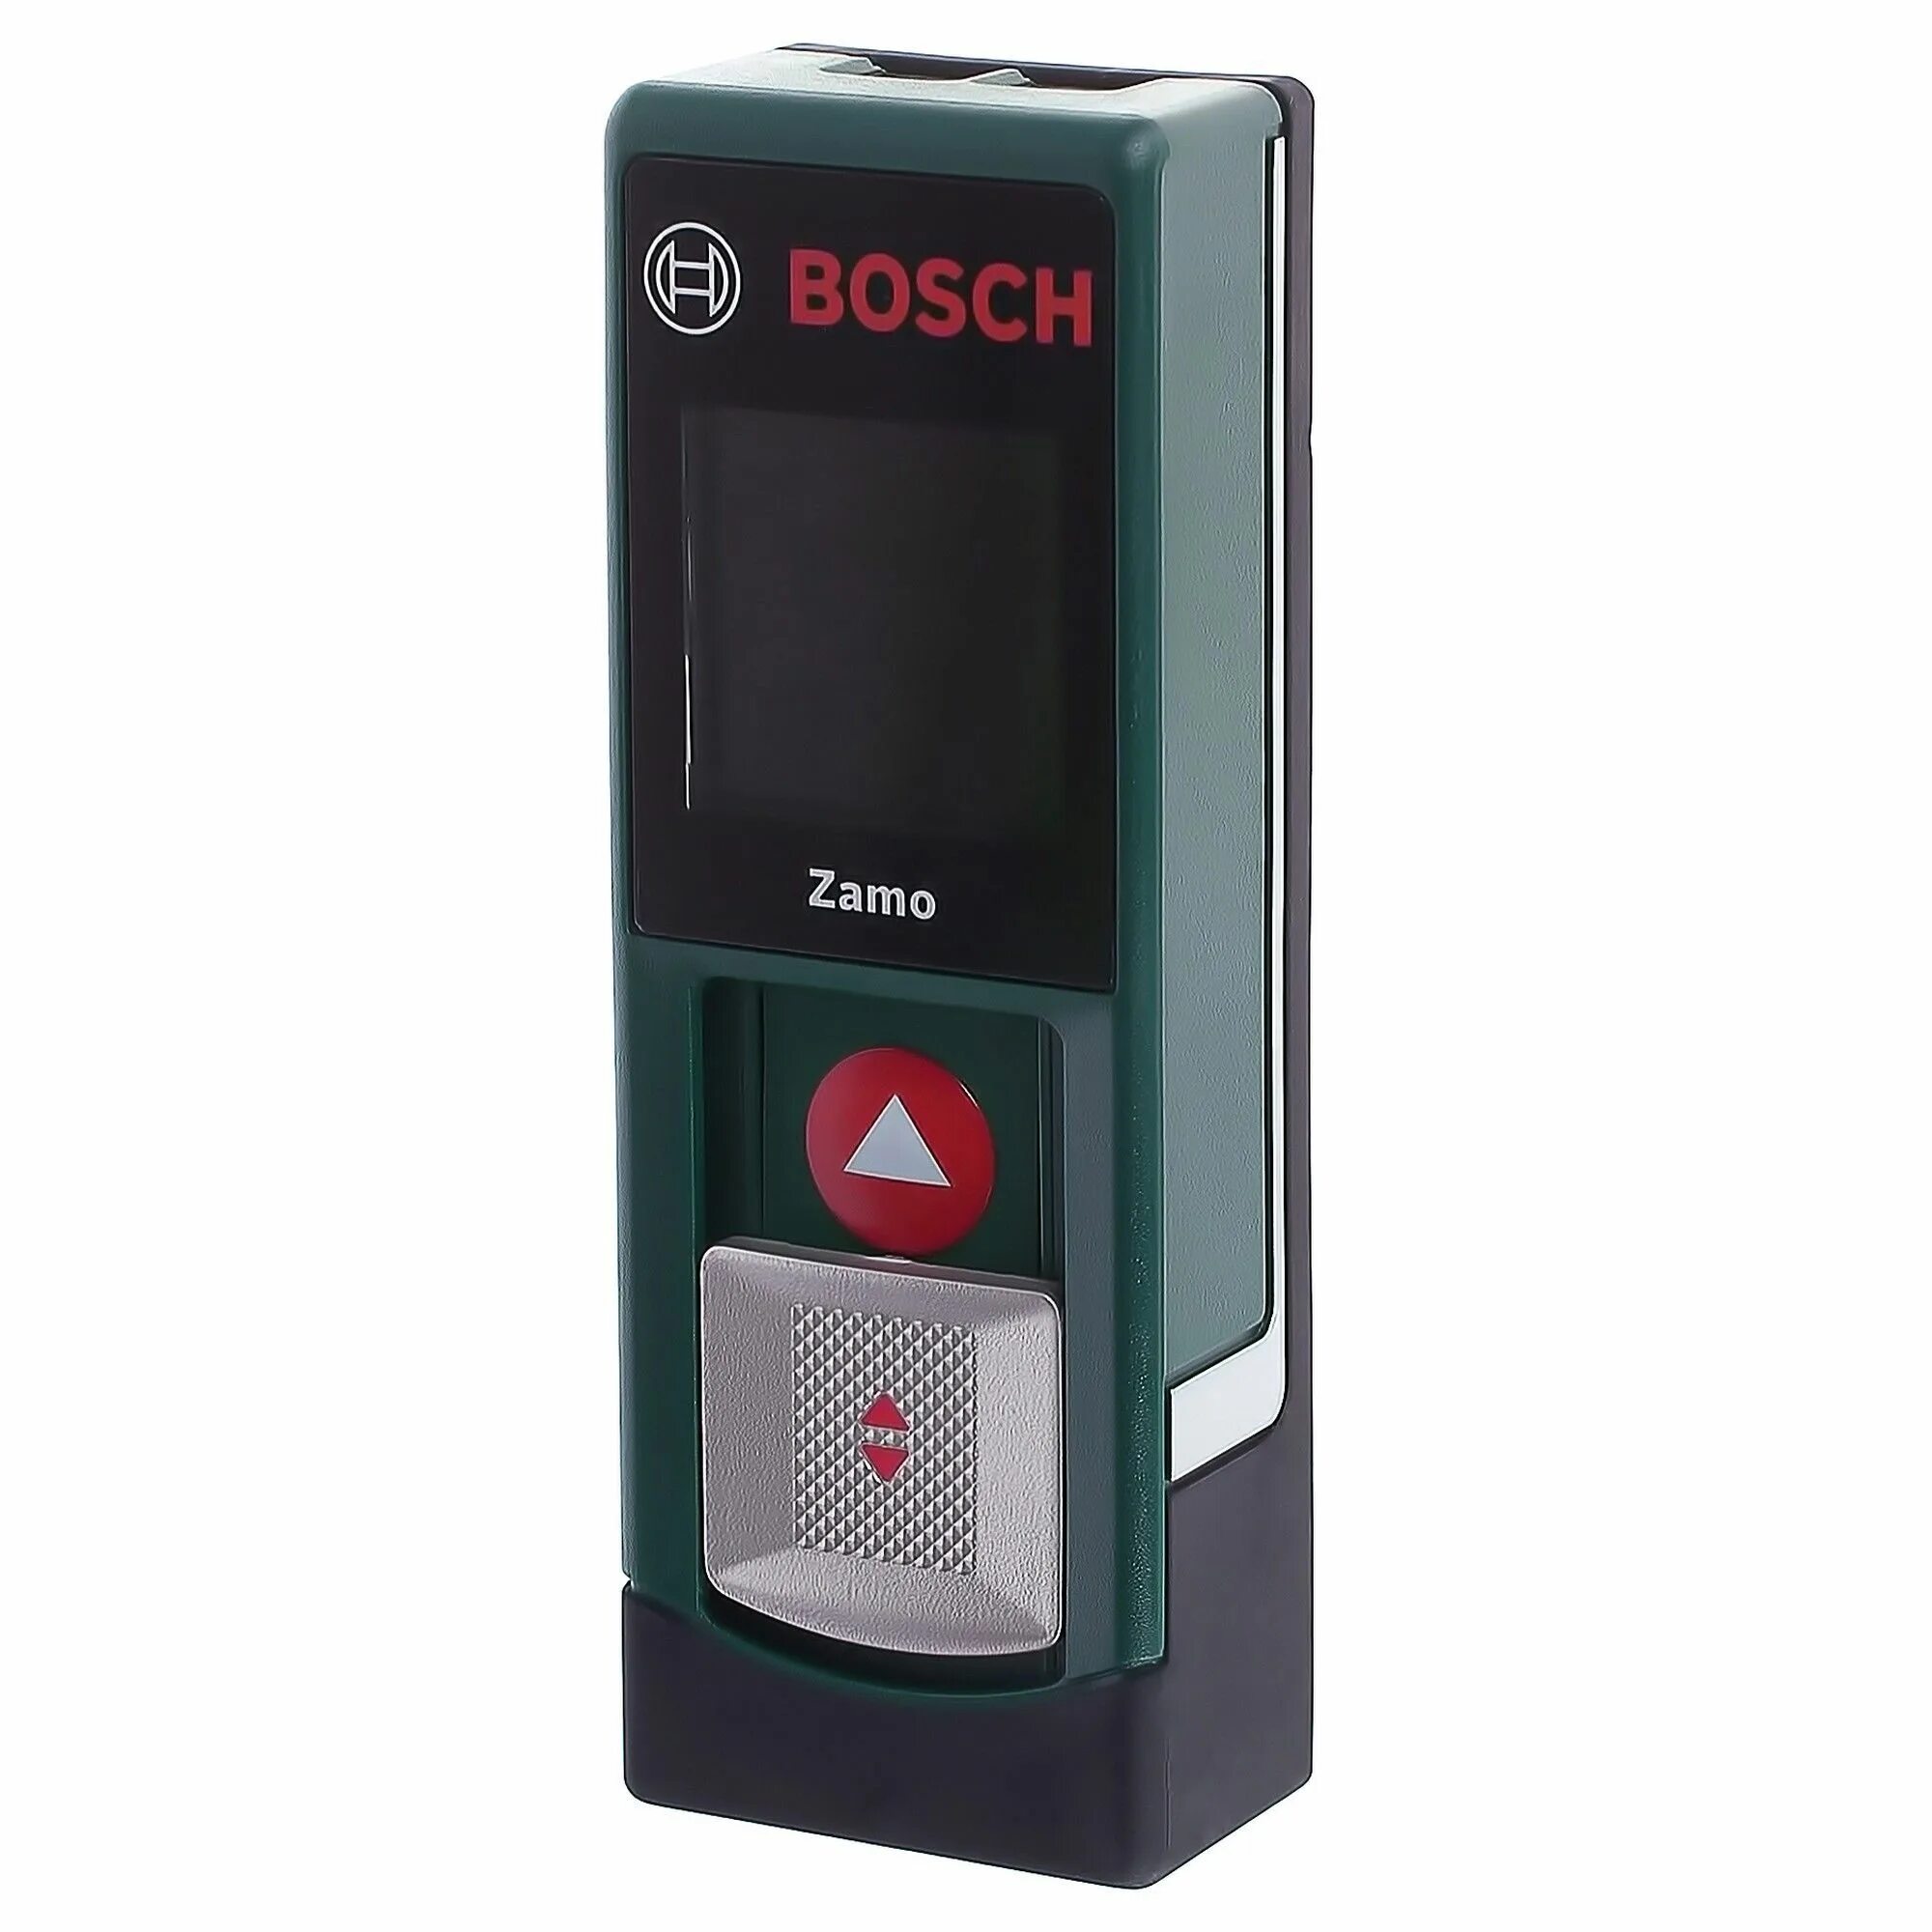 Дальномеры Bosch Zamo. Лазерный дальномер Bosch Zamo II. Лазерная Рулетка Bosch Zamo. Лазерная Рулетка (лазерный дальномер) Bosch plr25.